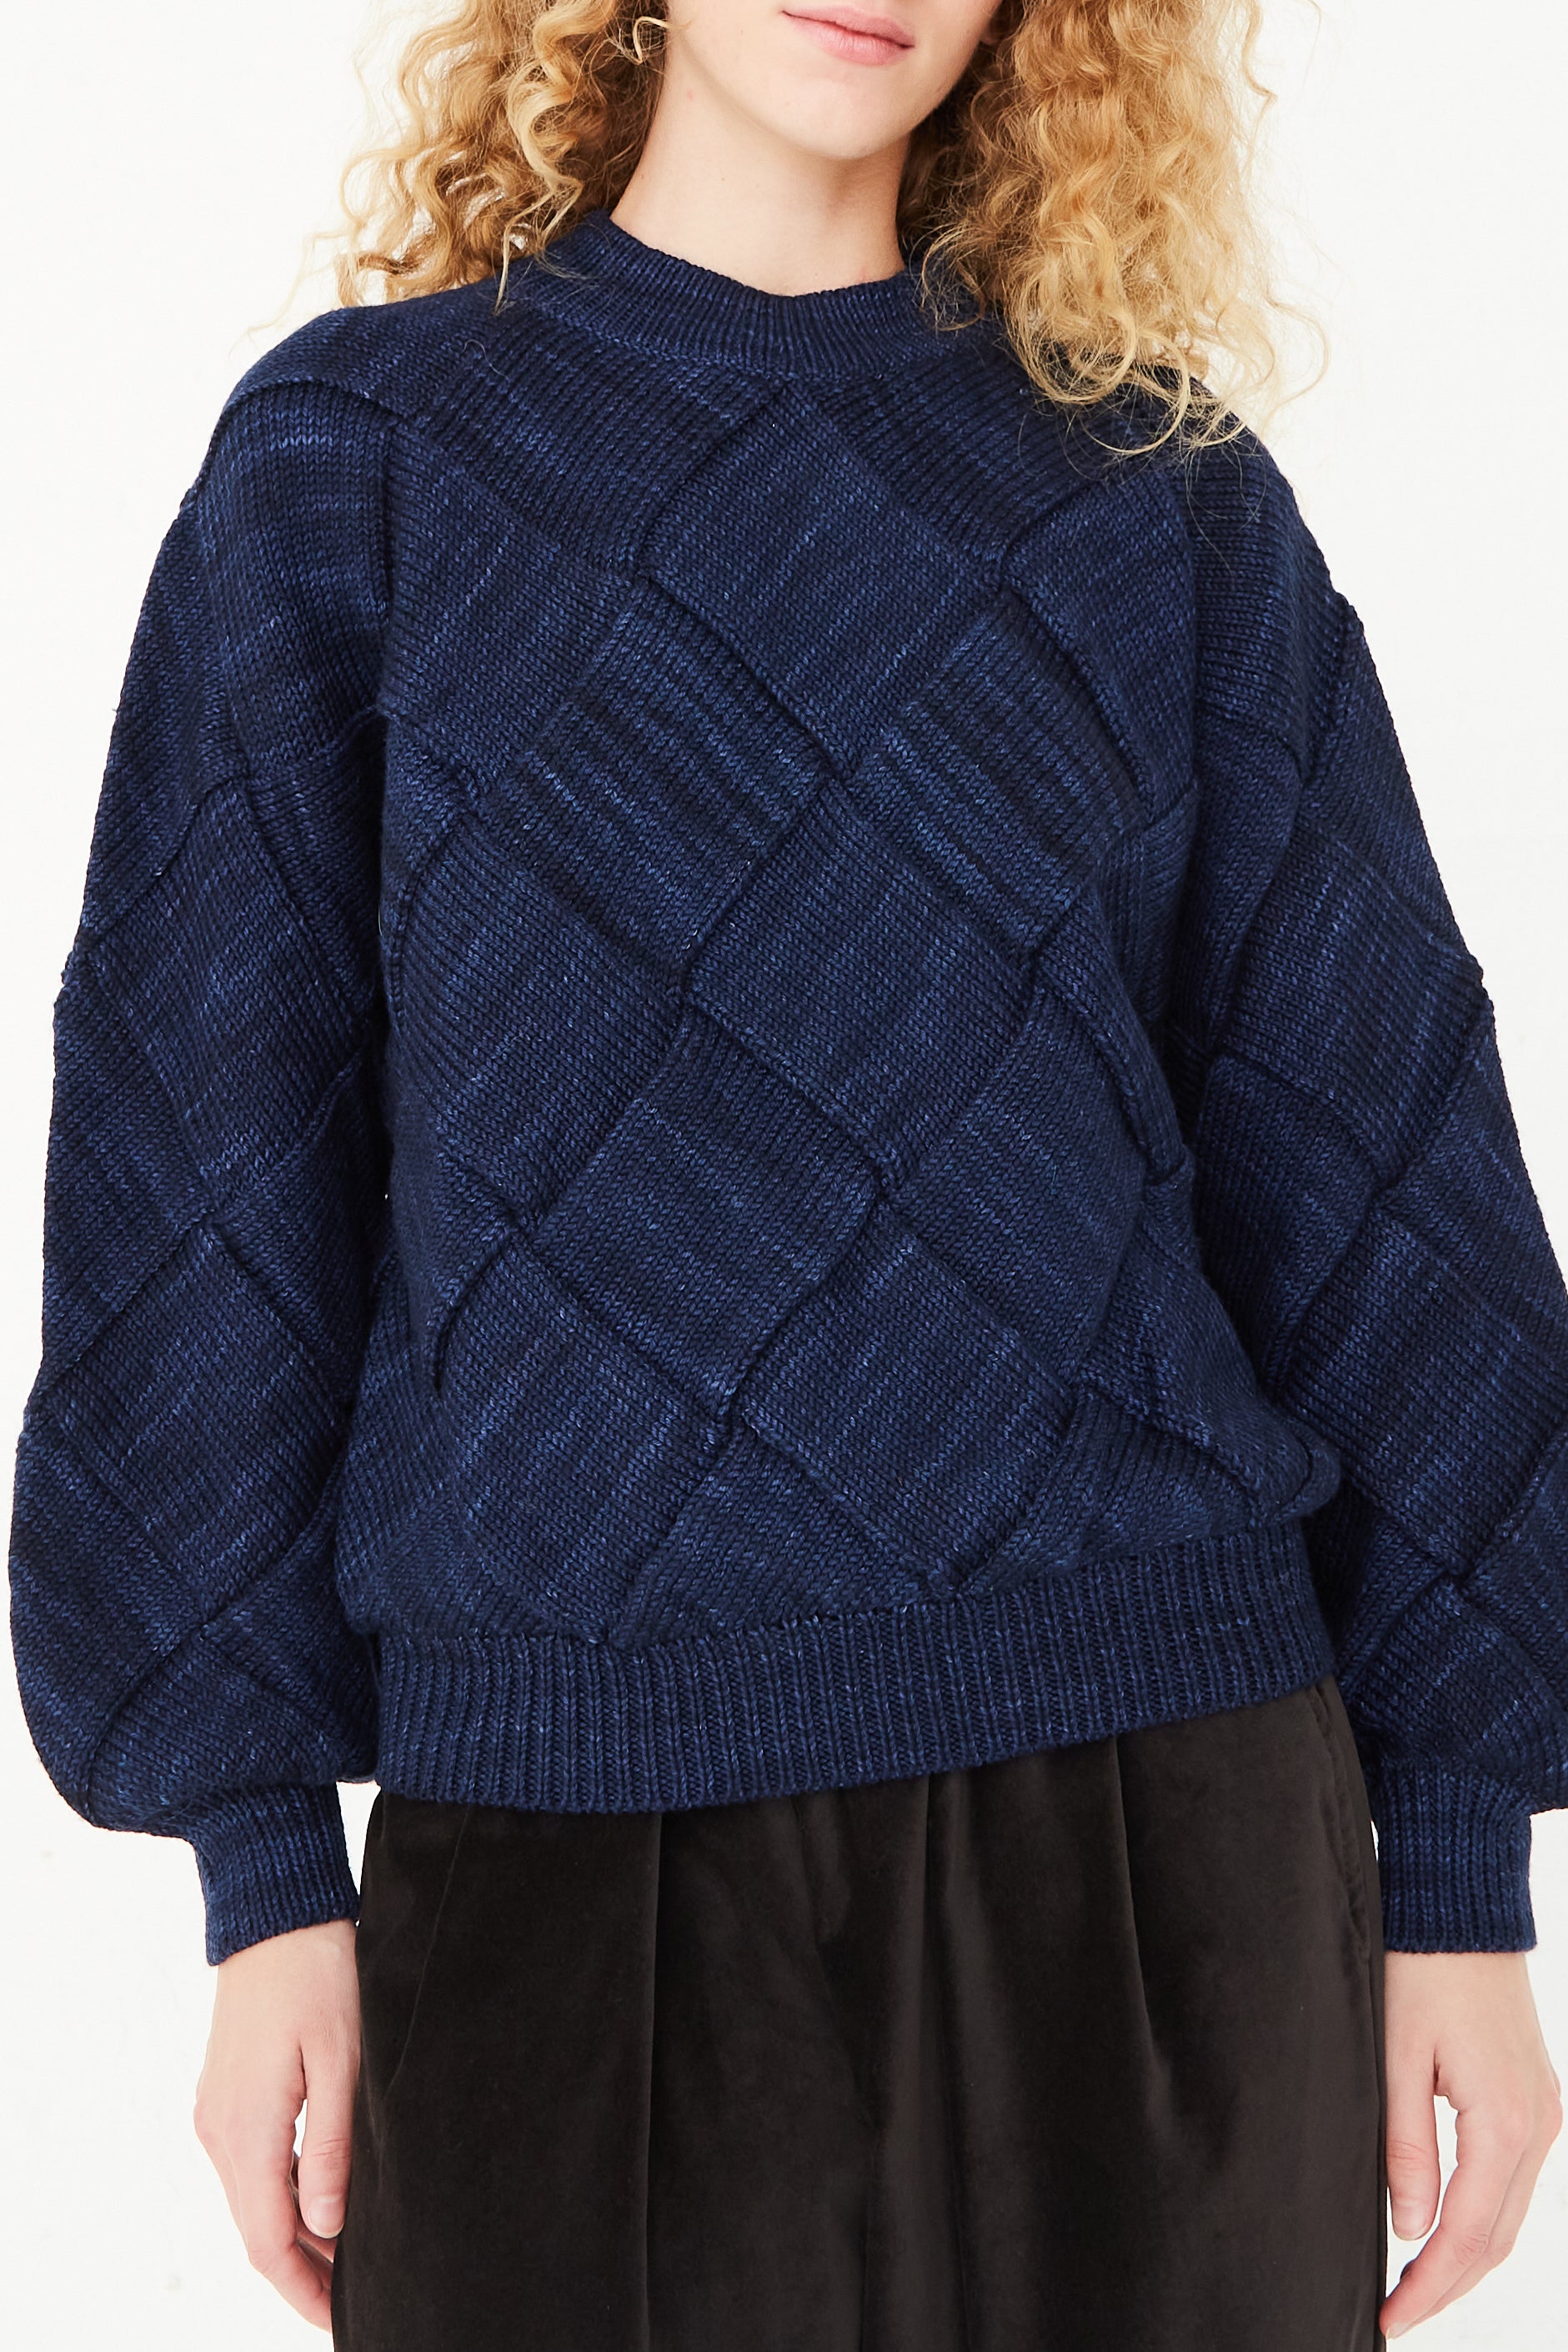 Misha & Puff - Entrelac Sweater in Ink | Oroboro Store